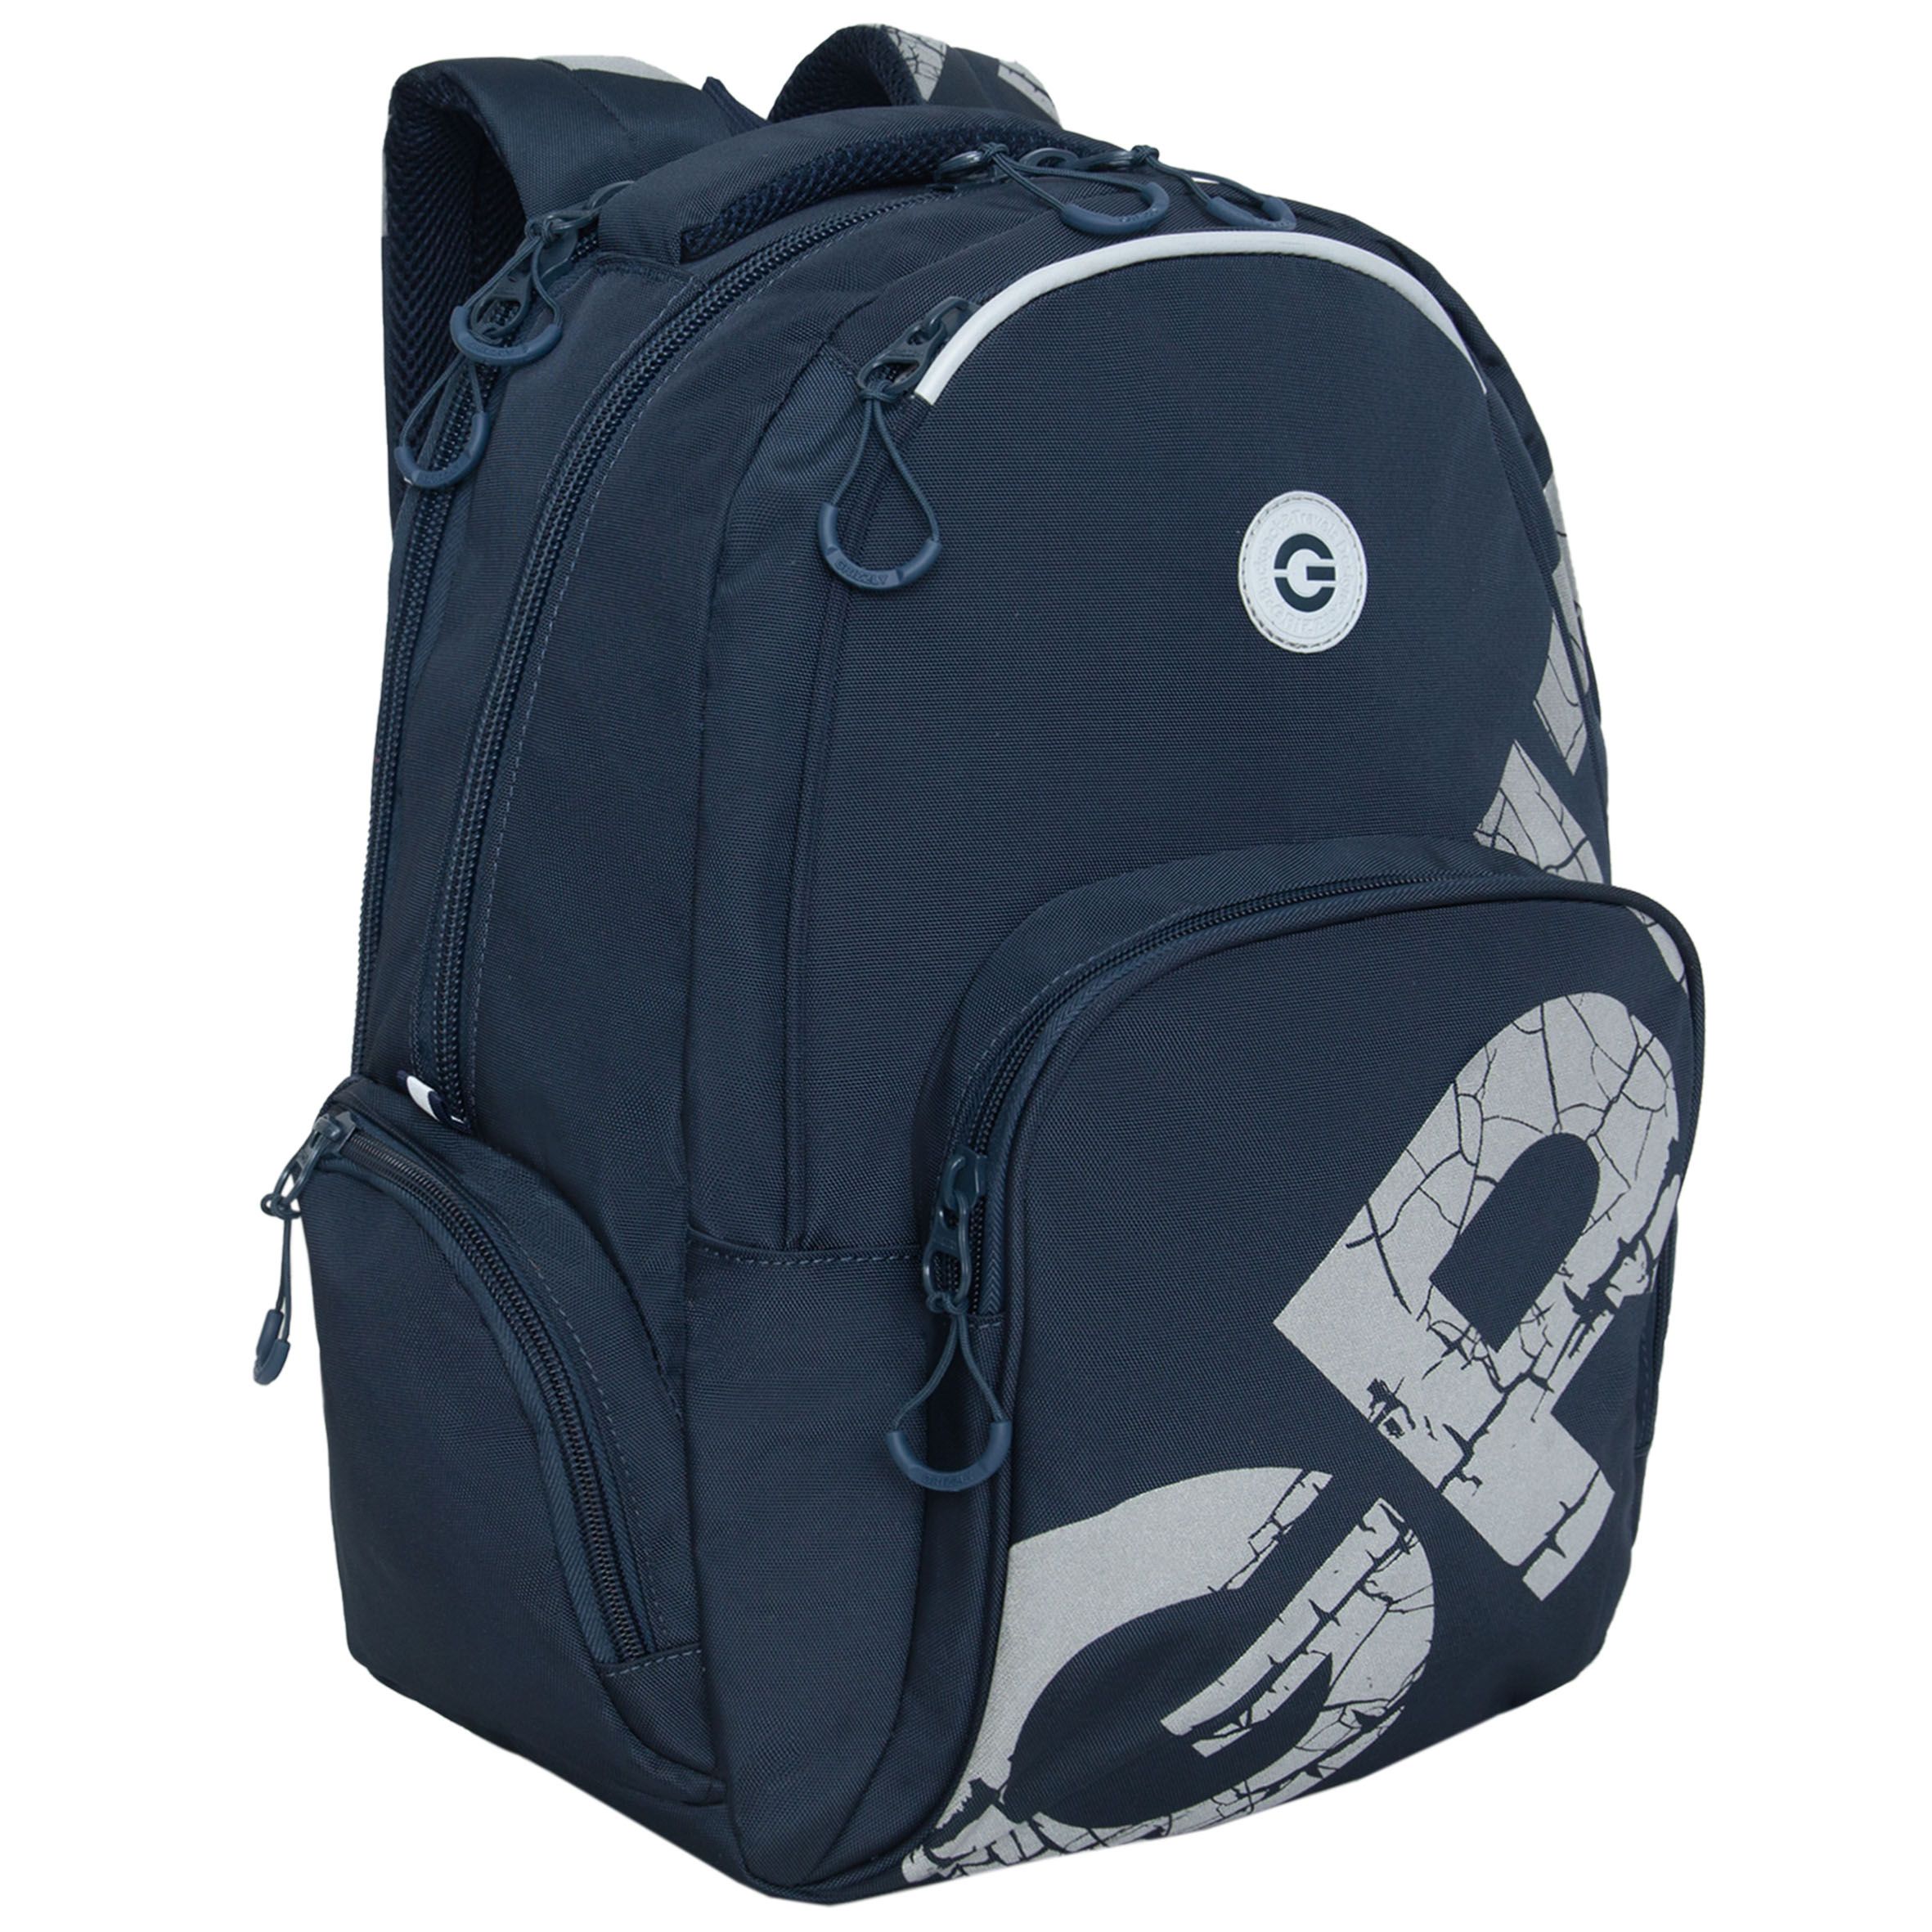 Рюкзак GRIZZLY RU-433-1 молодежный модный для подростков темно-синий рюкзак молодежный отд на молнии н карман синий 42 х 31 х 15 см